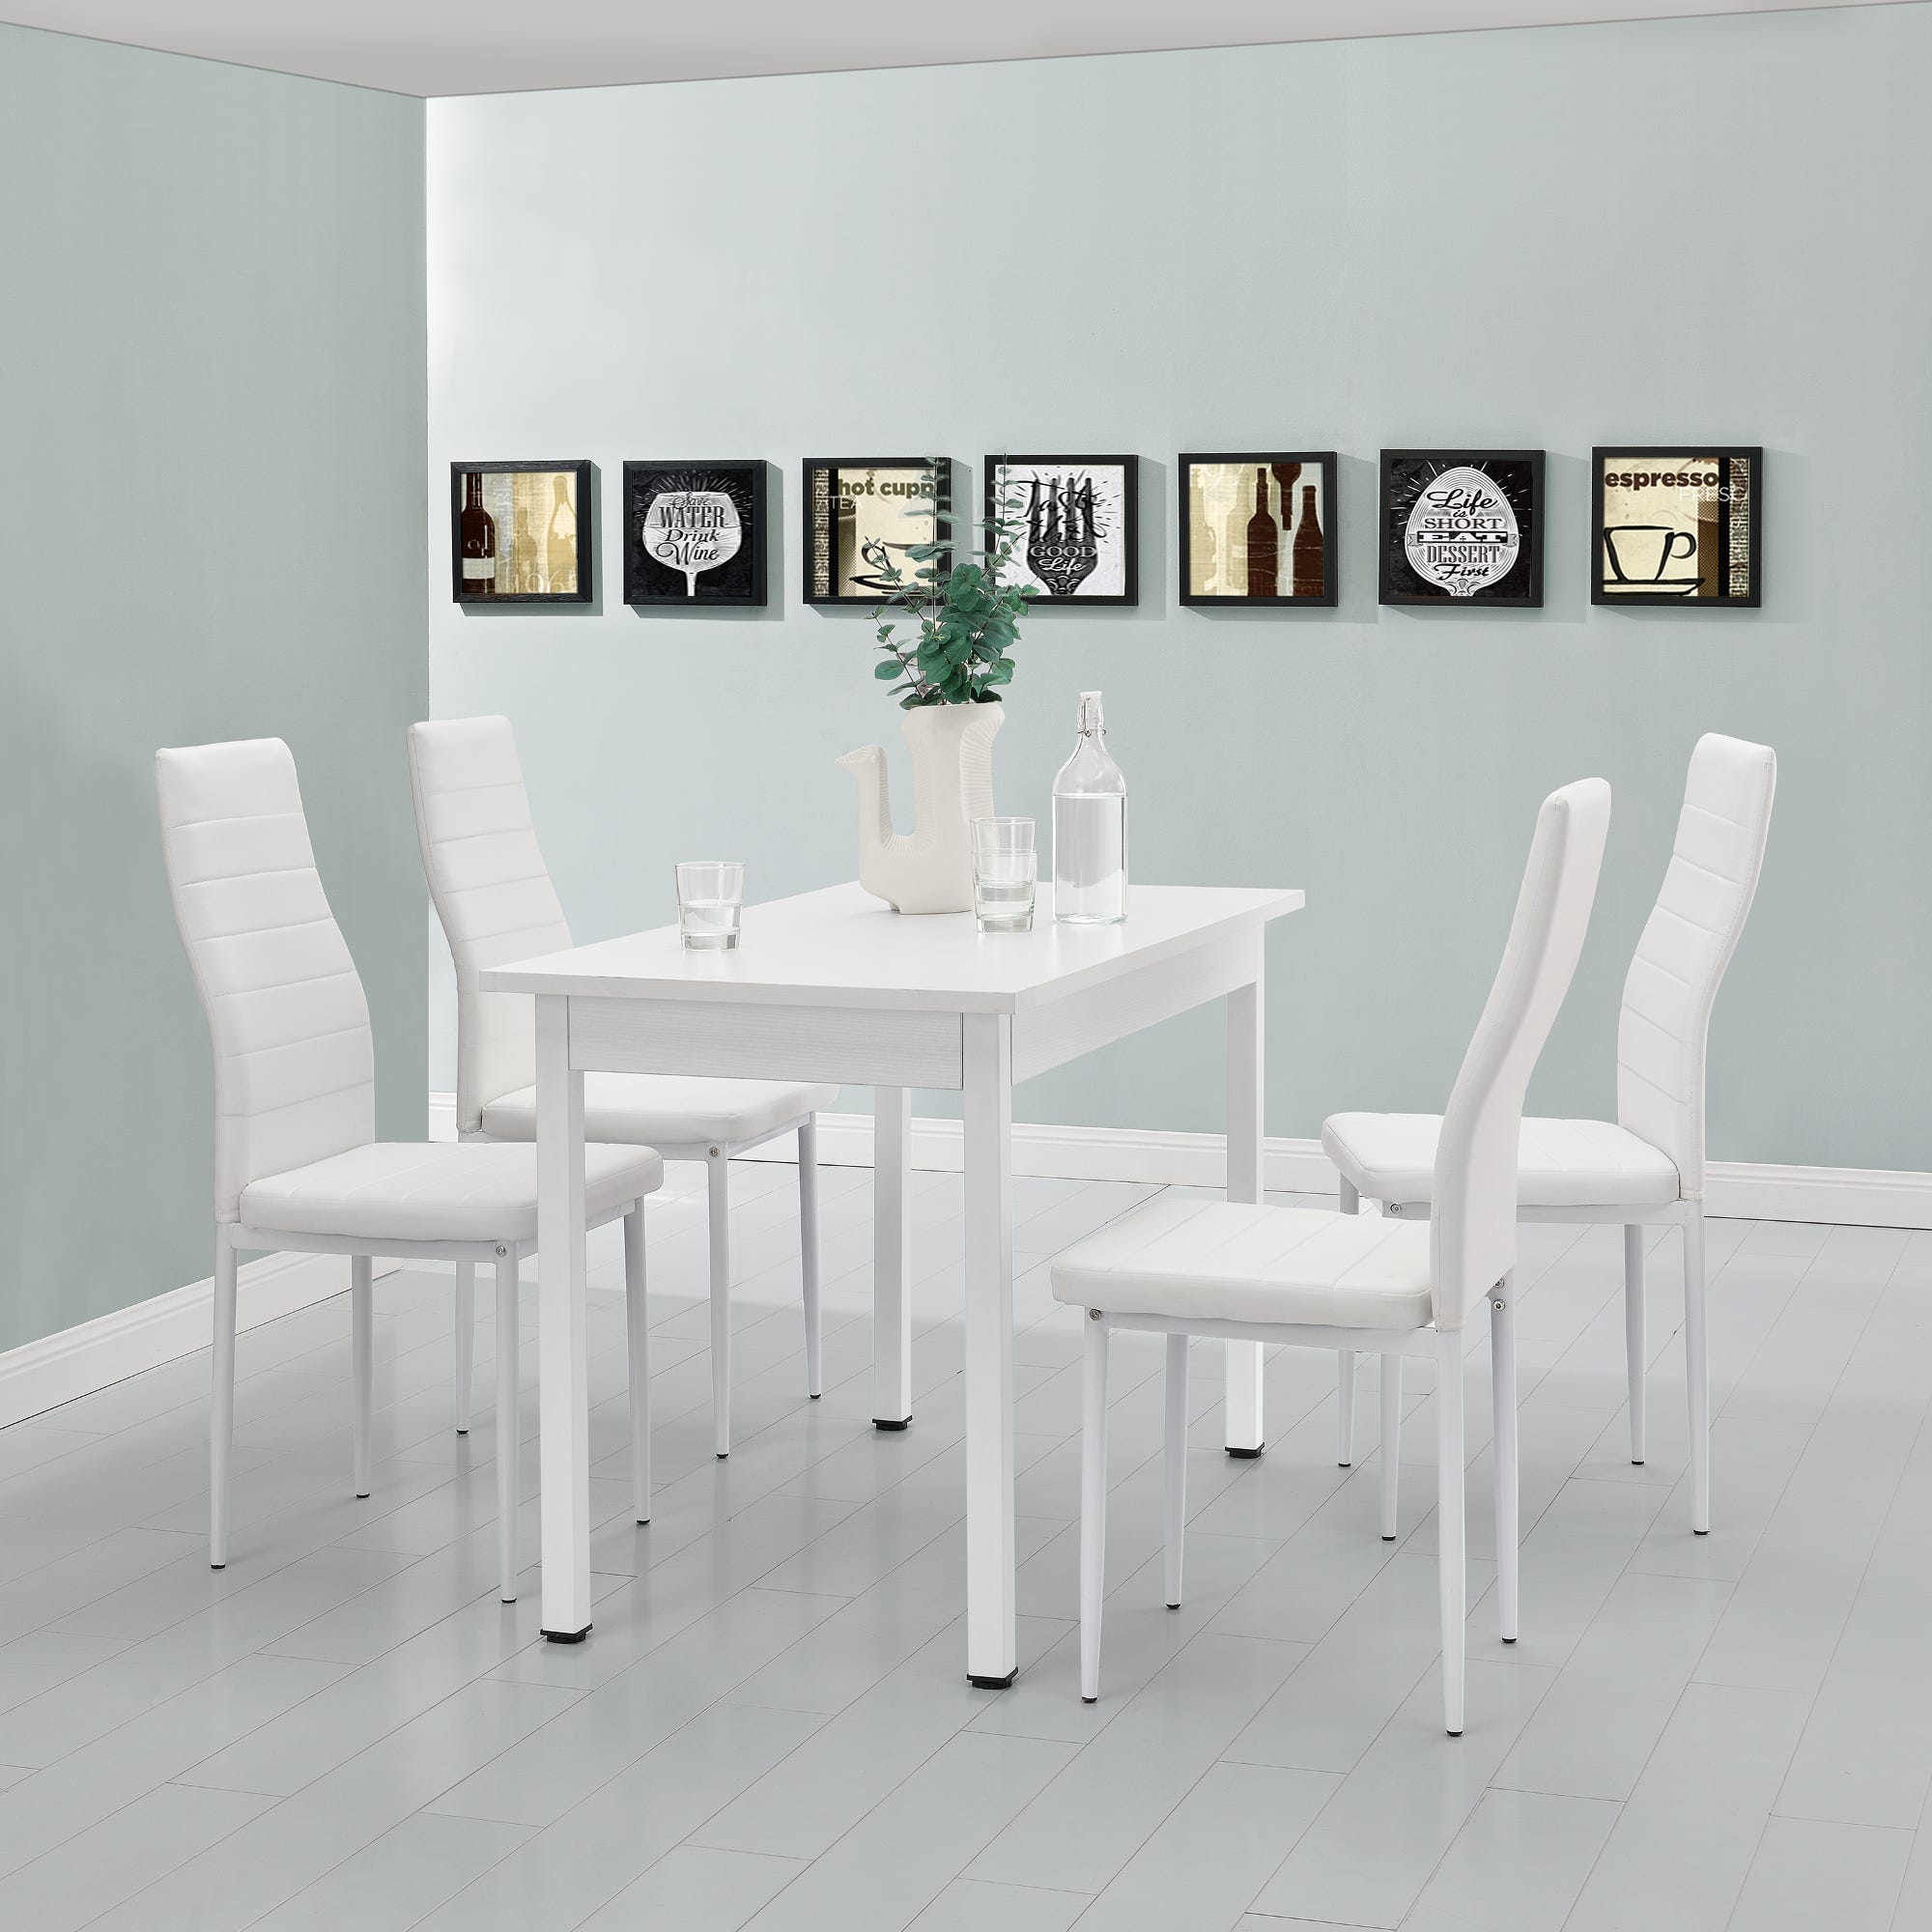 en.casa] Tavolo da pranzo bianco - 120x60cm - con 4 sedie imbottite bianche  in similpelle